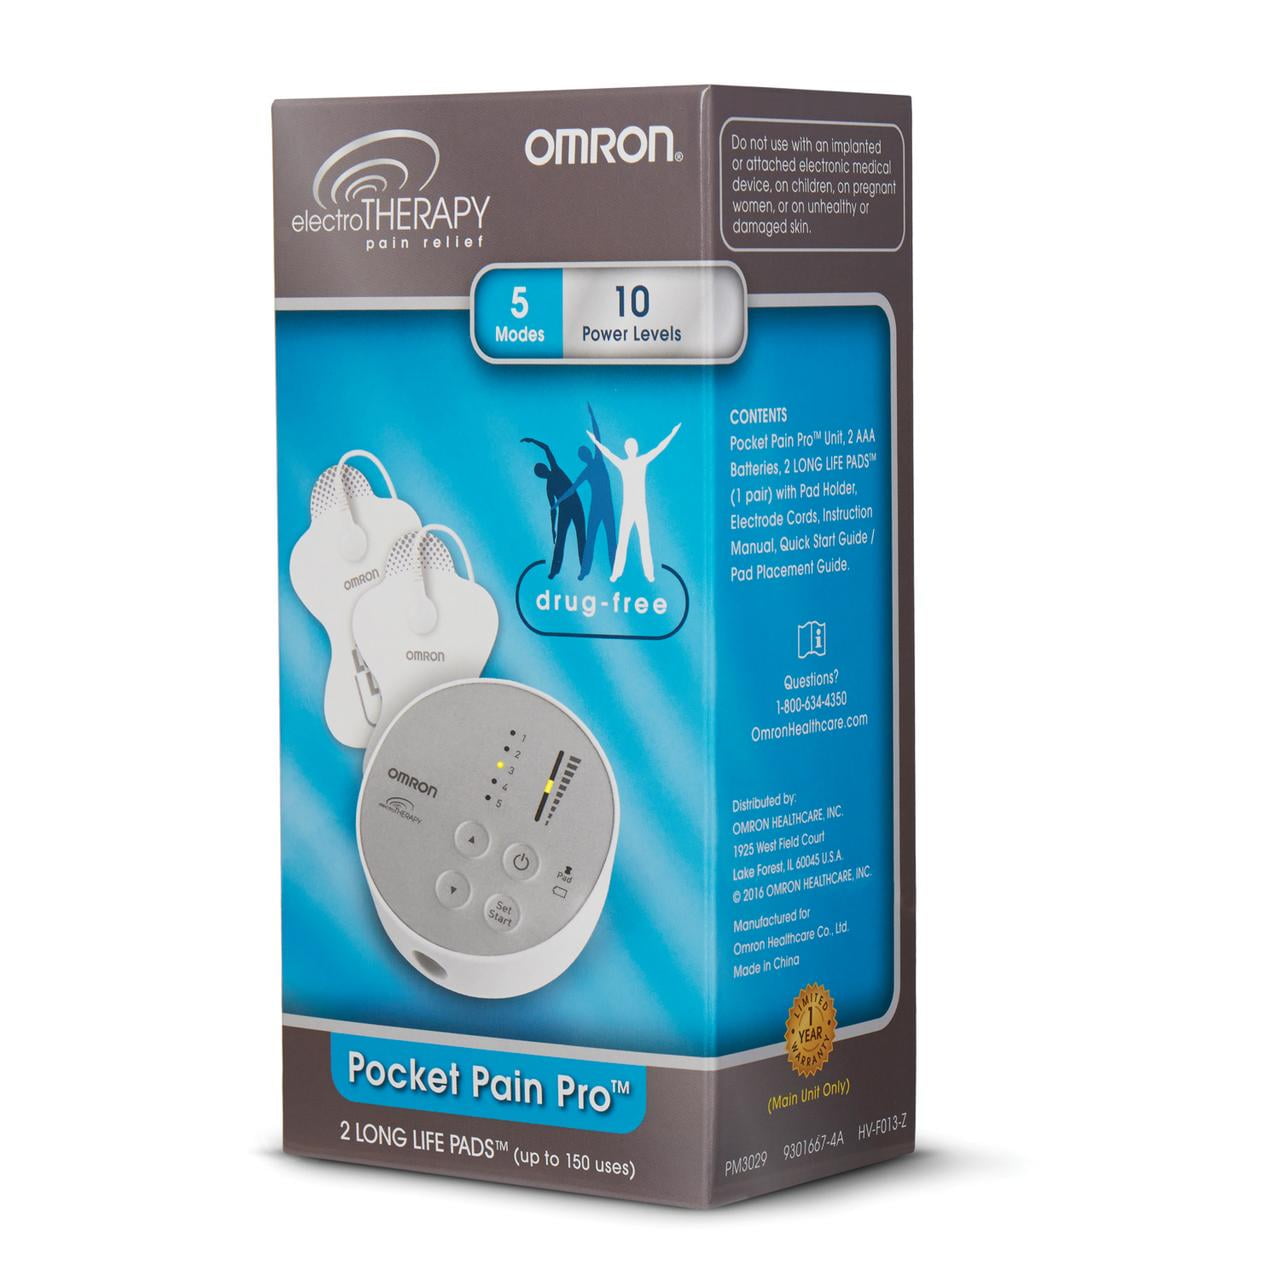 OMRON Pocket Pain Pro TENS Unit